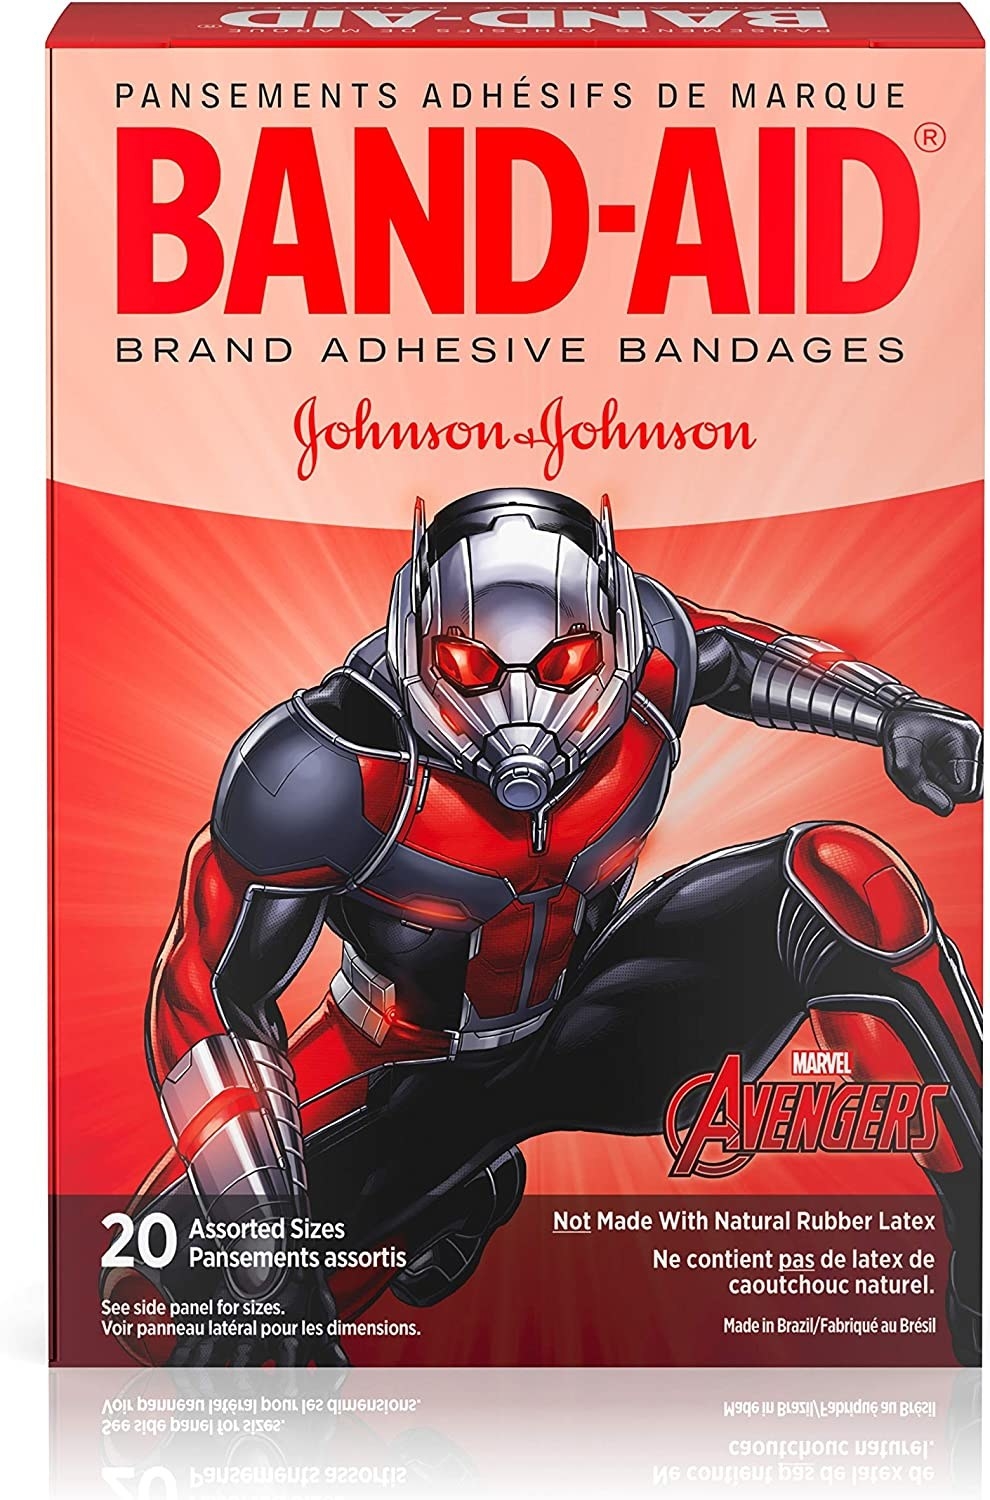 the box of avengers bandaids